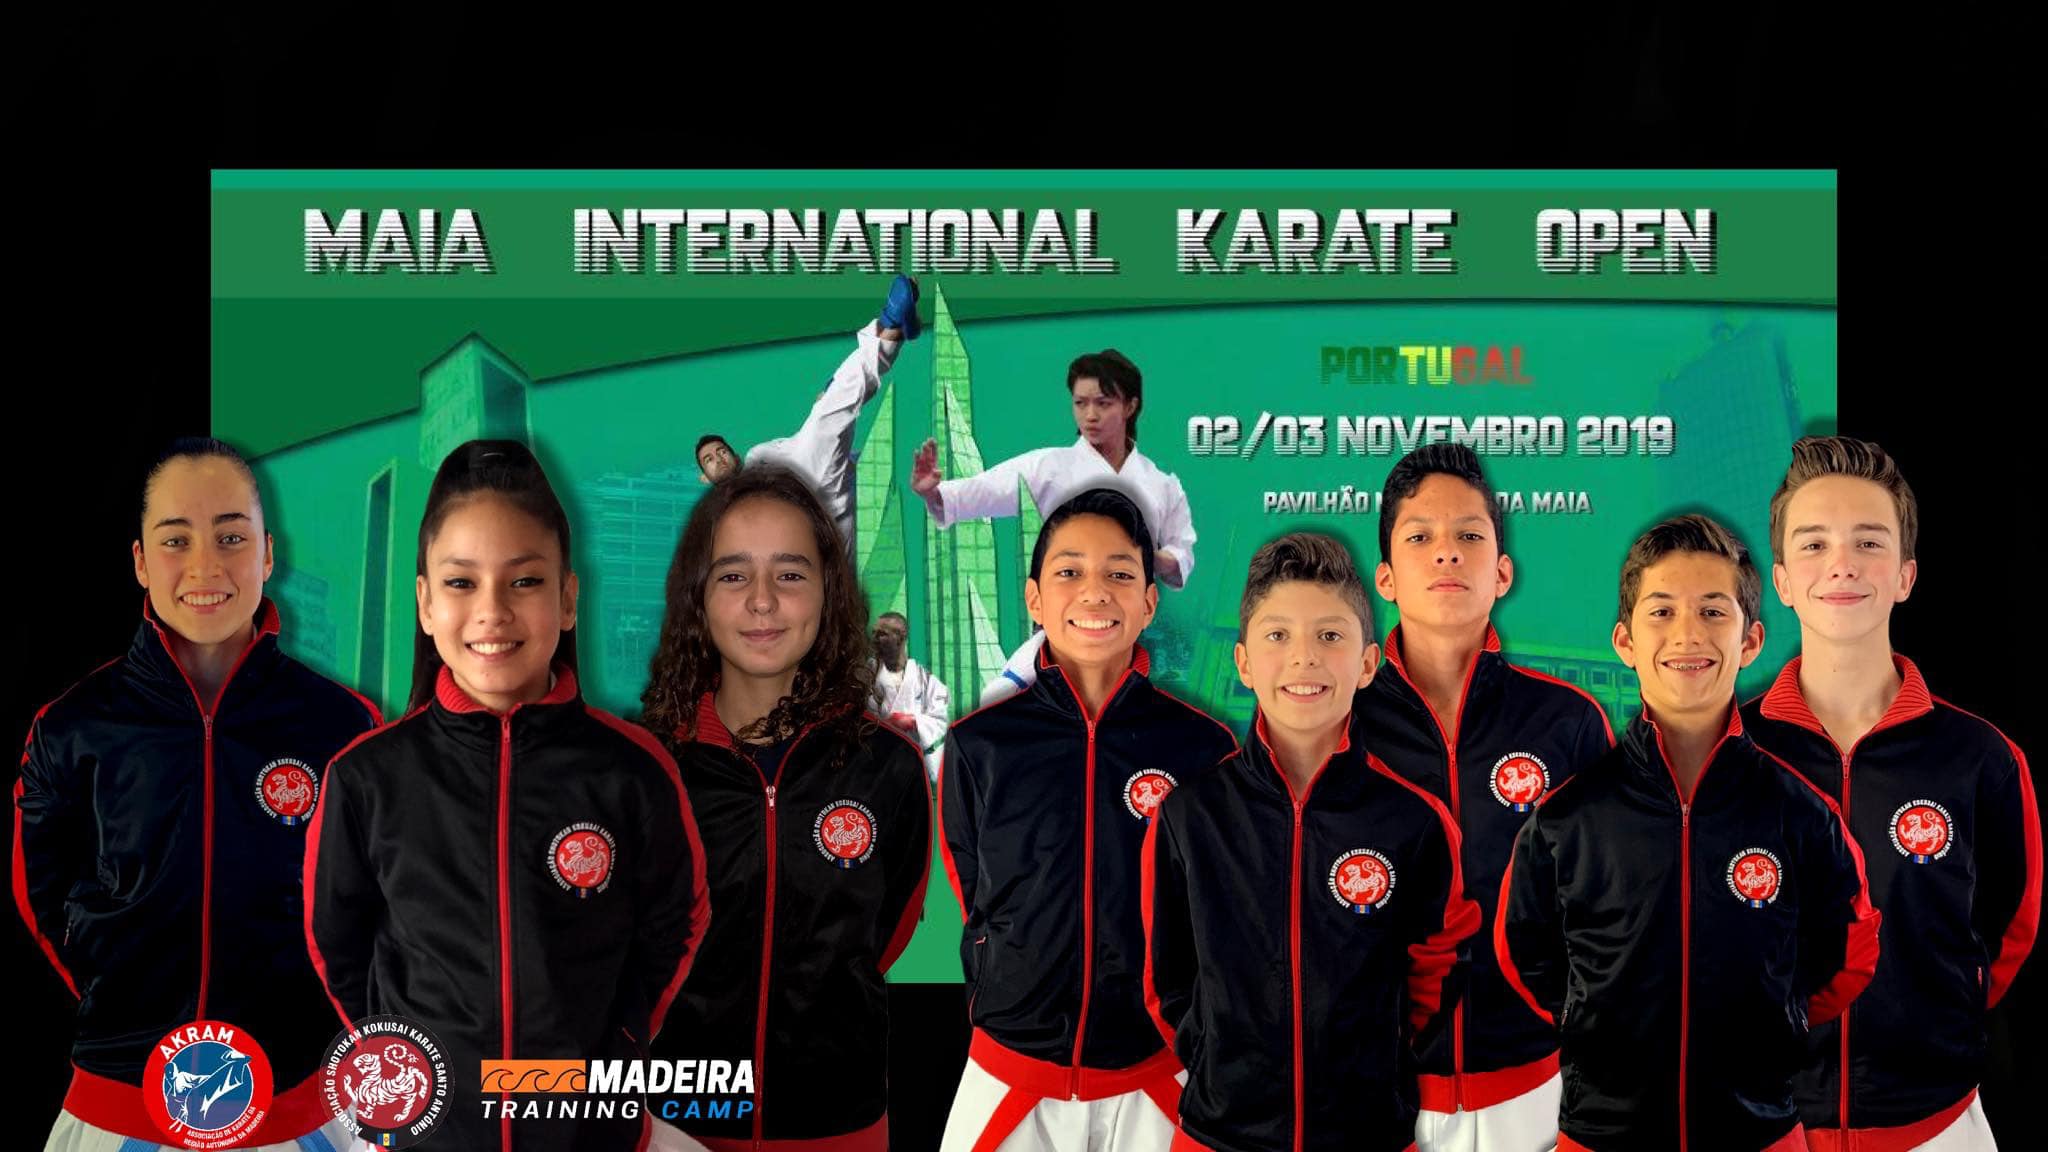 MIKO 2019 - Maia Internacional Karate Open 2019